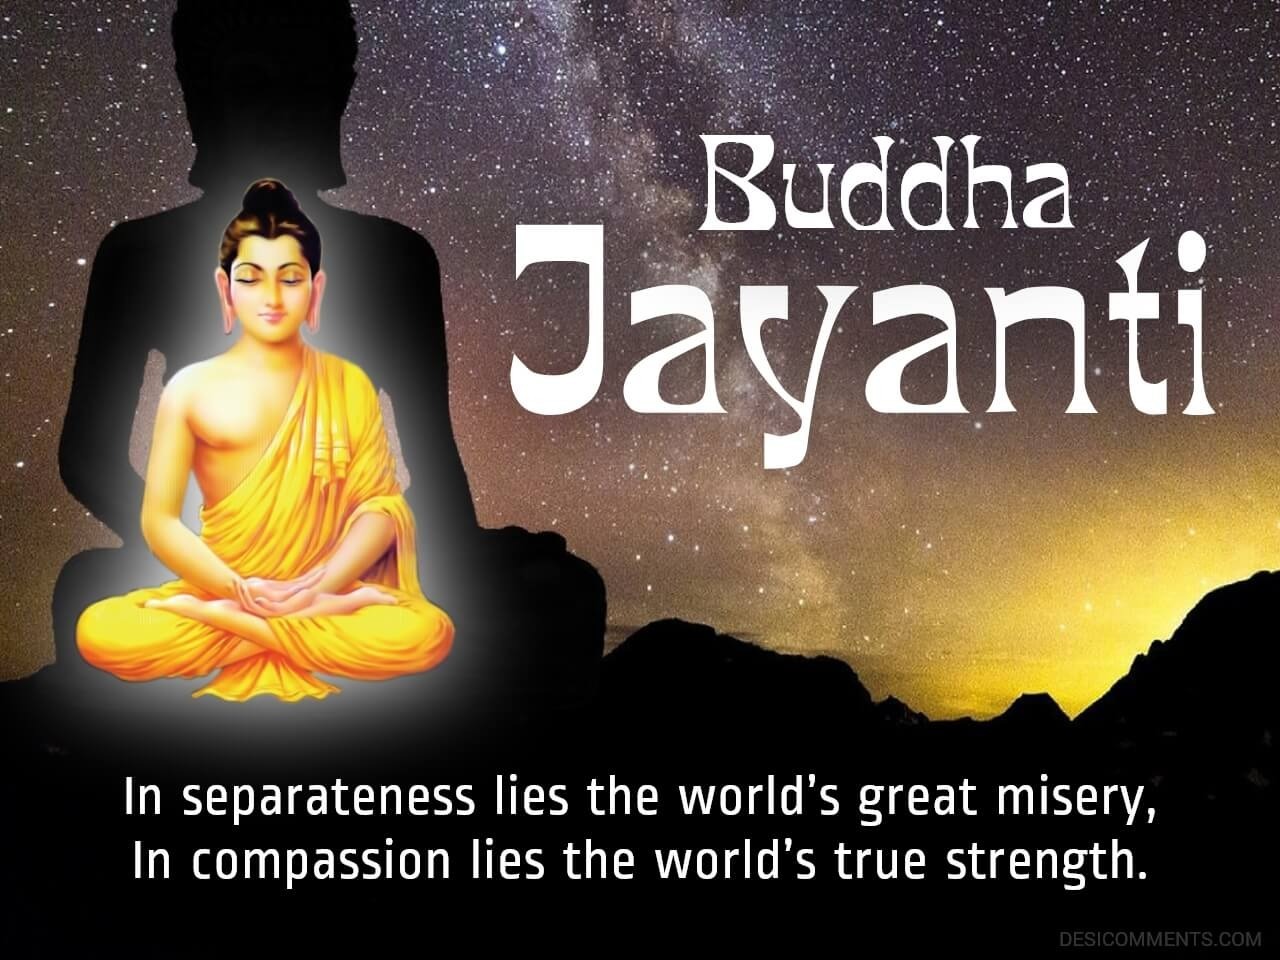 60+ Buddha Jayanti Pictures, Images, Photos